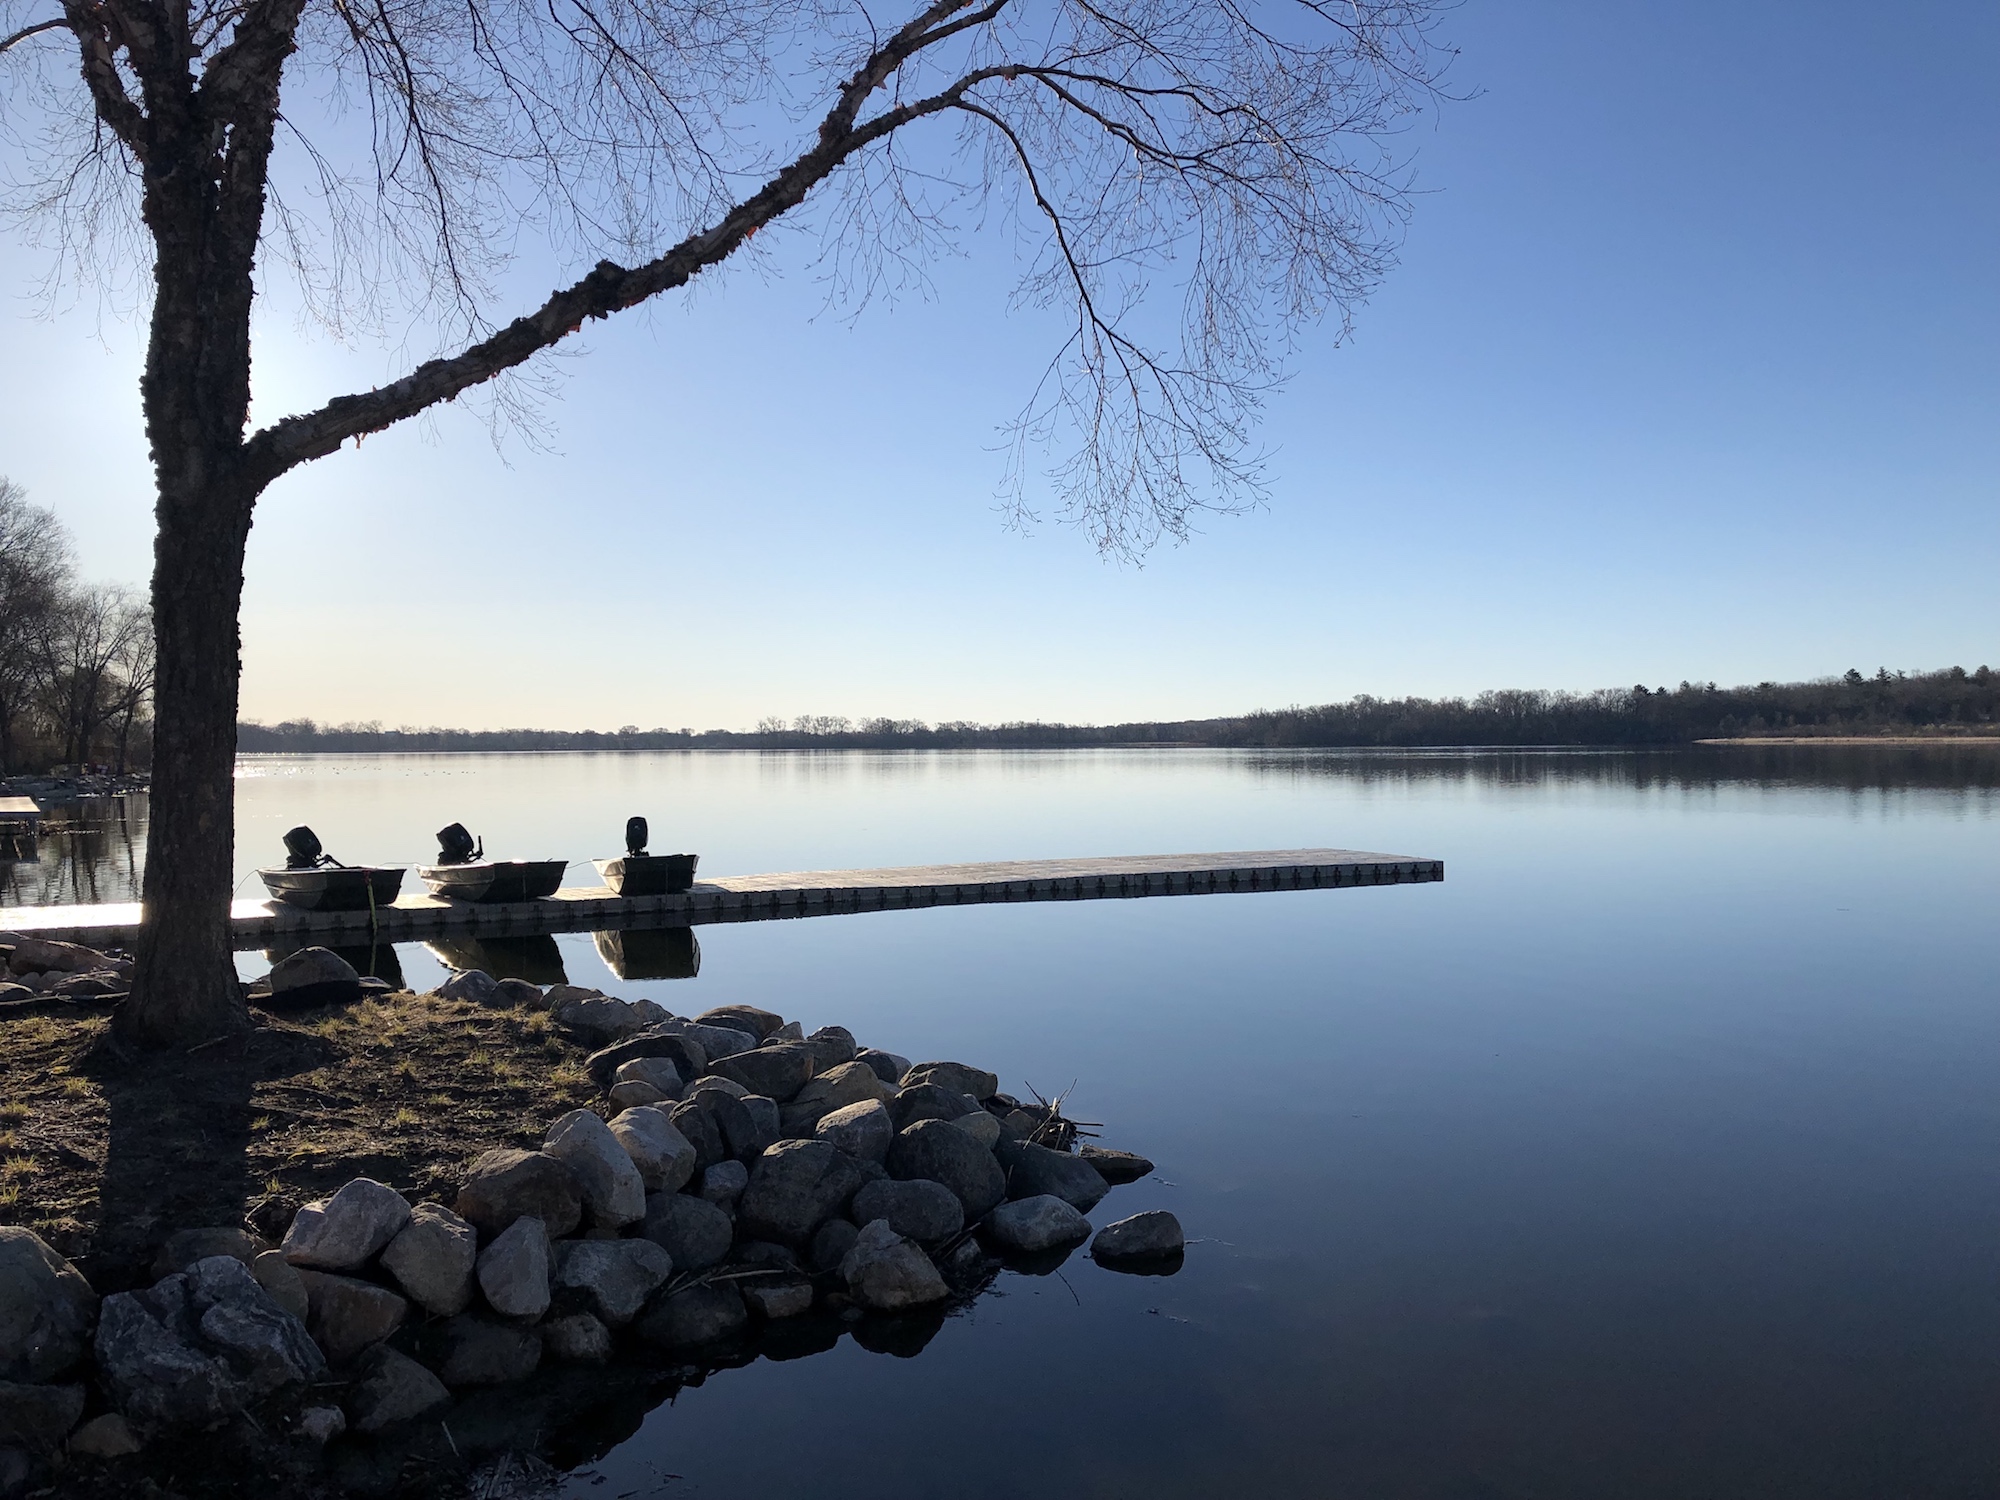 Lake Wingra on April 20, 2019.